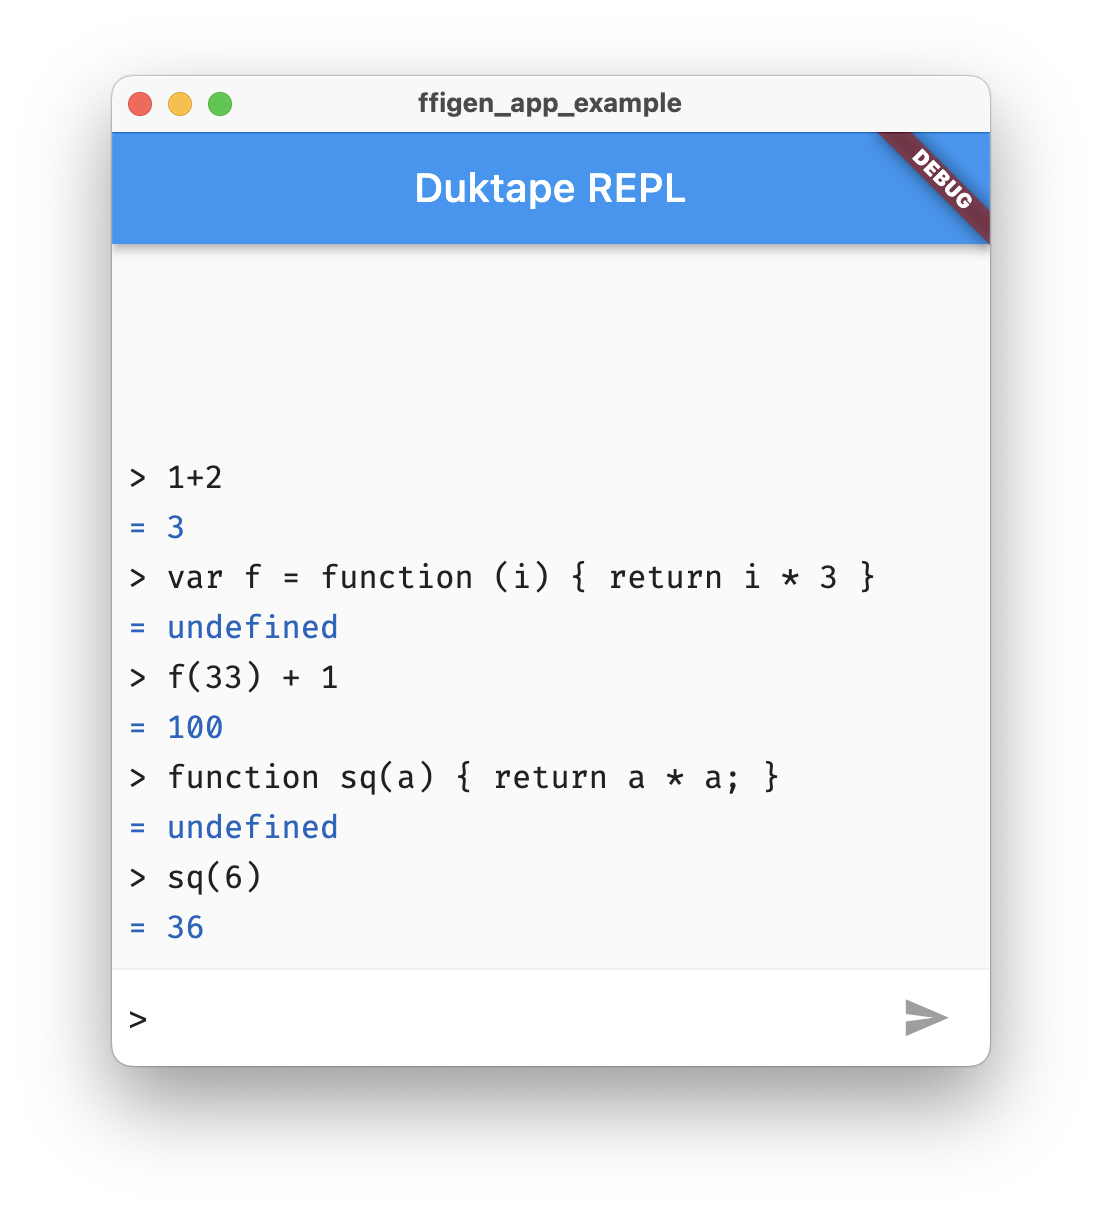 Duktape REPL running as a macOS application